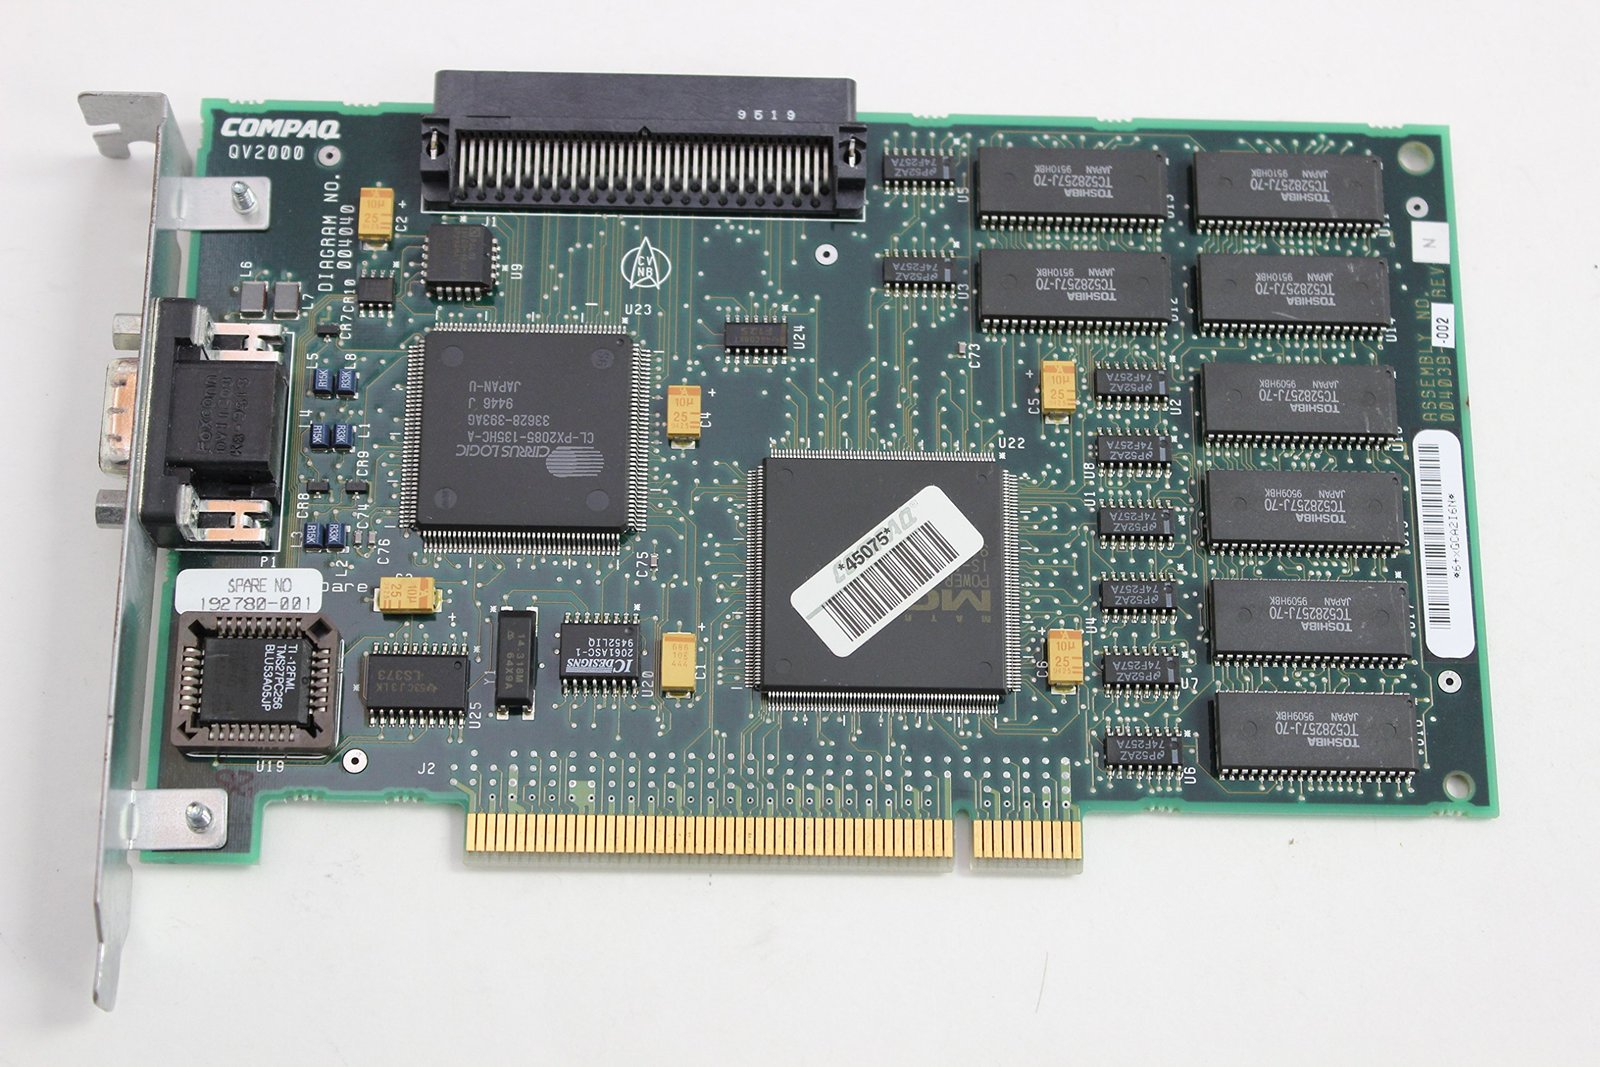 Compaq Genuine Qvision 2000 PCI Video Card V.2 - Refurbished - 192780-001 - $49.00